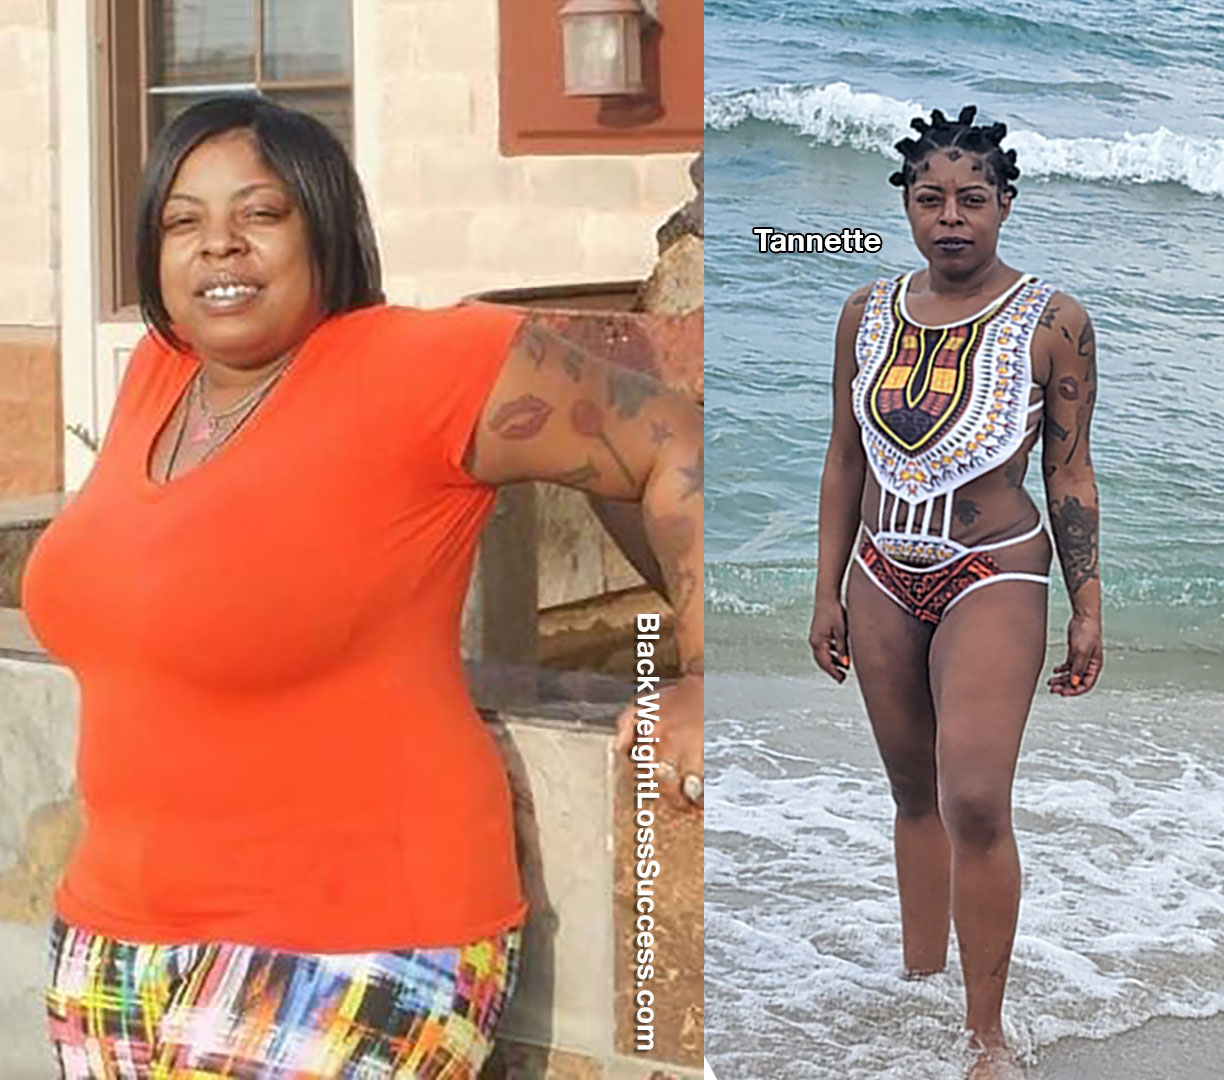 Tannette lost 90 pounds